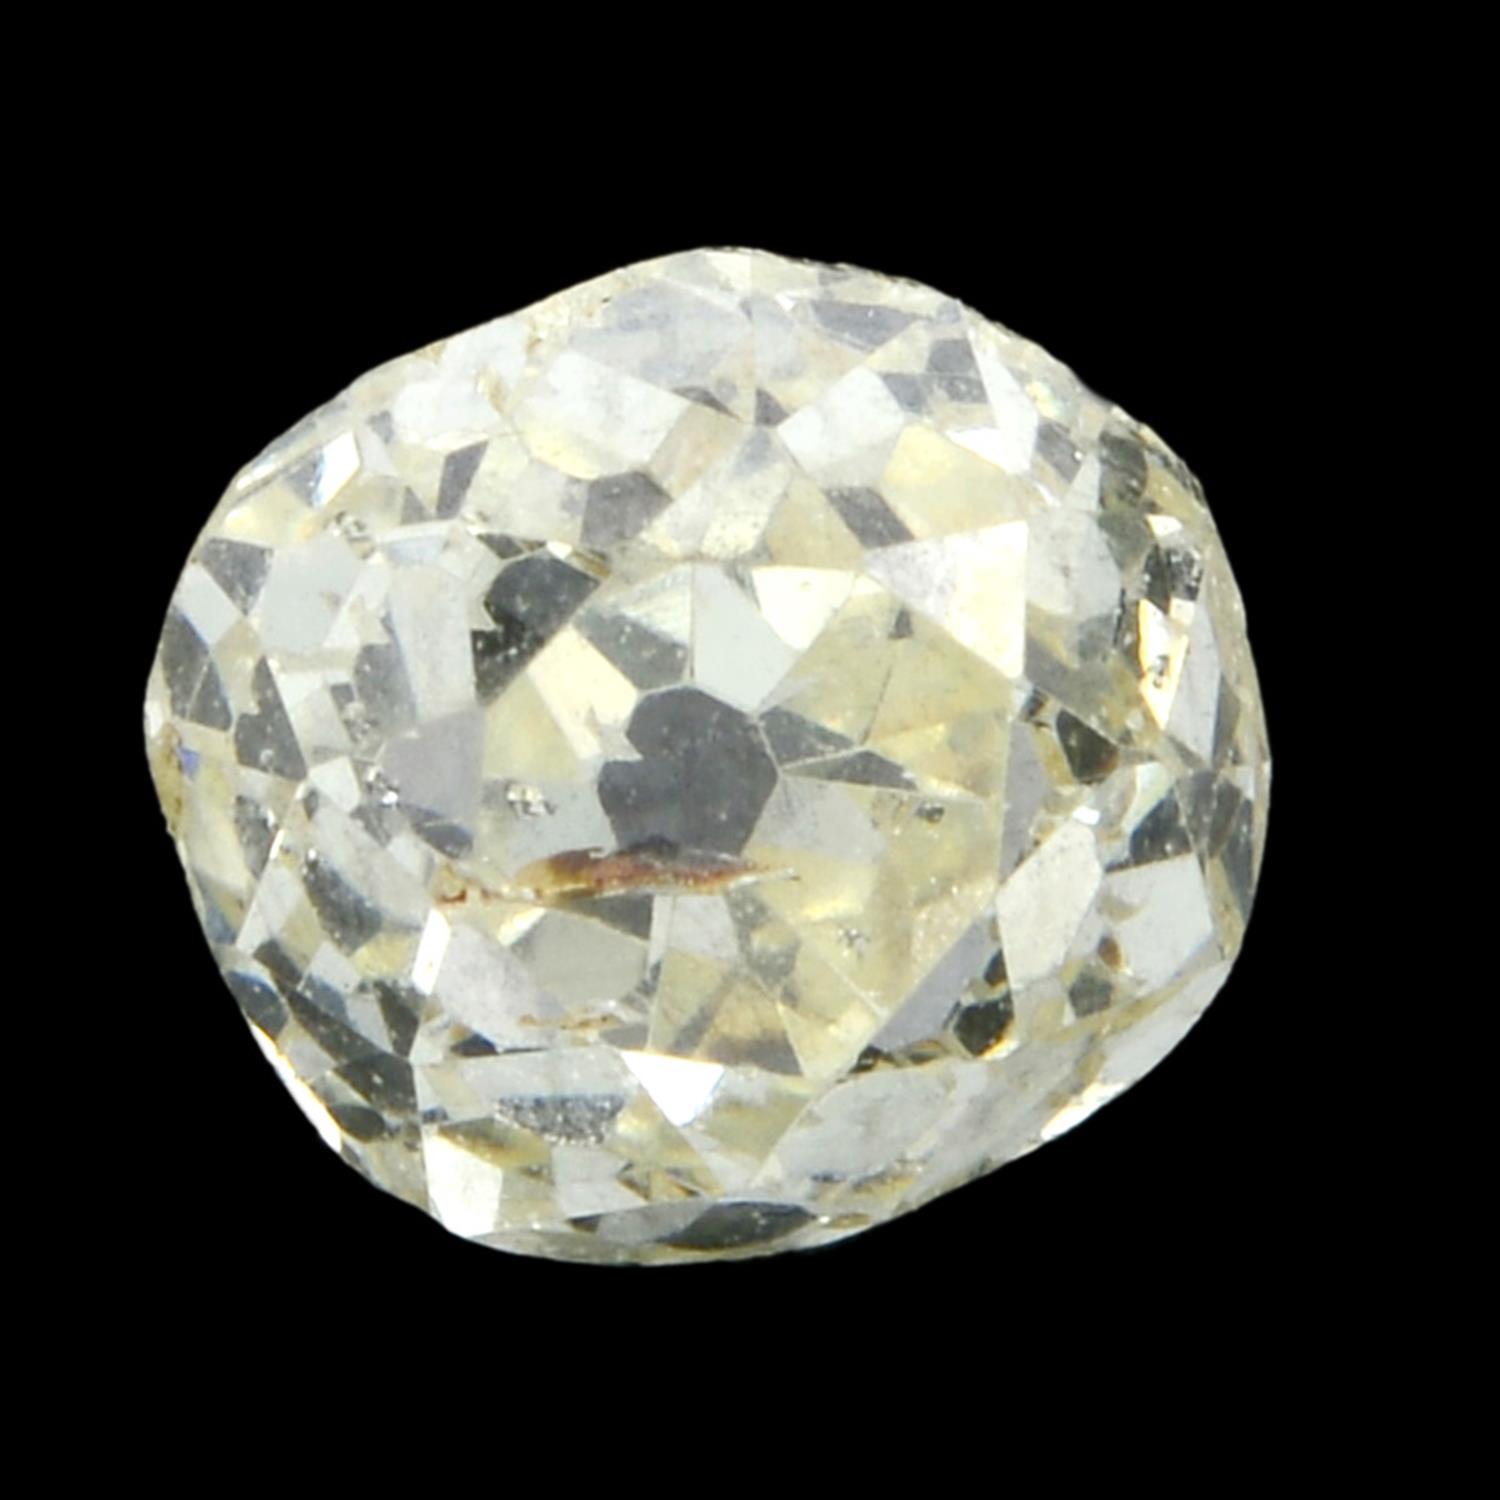 An old cut diamond, weighing 0.56ct